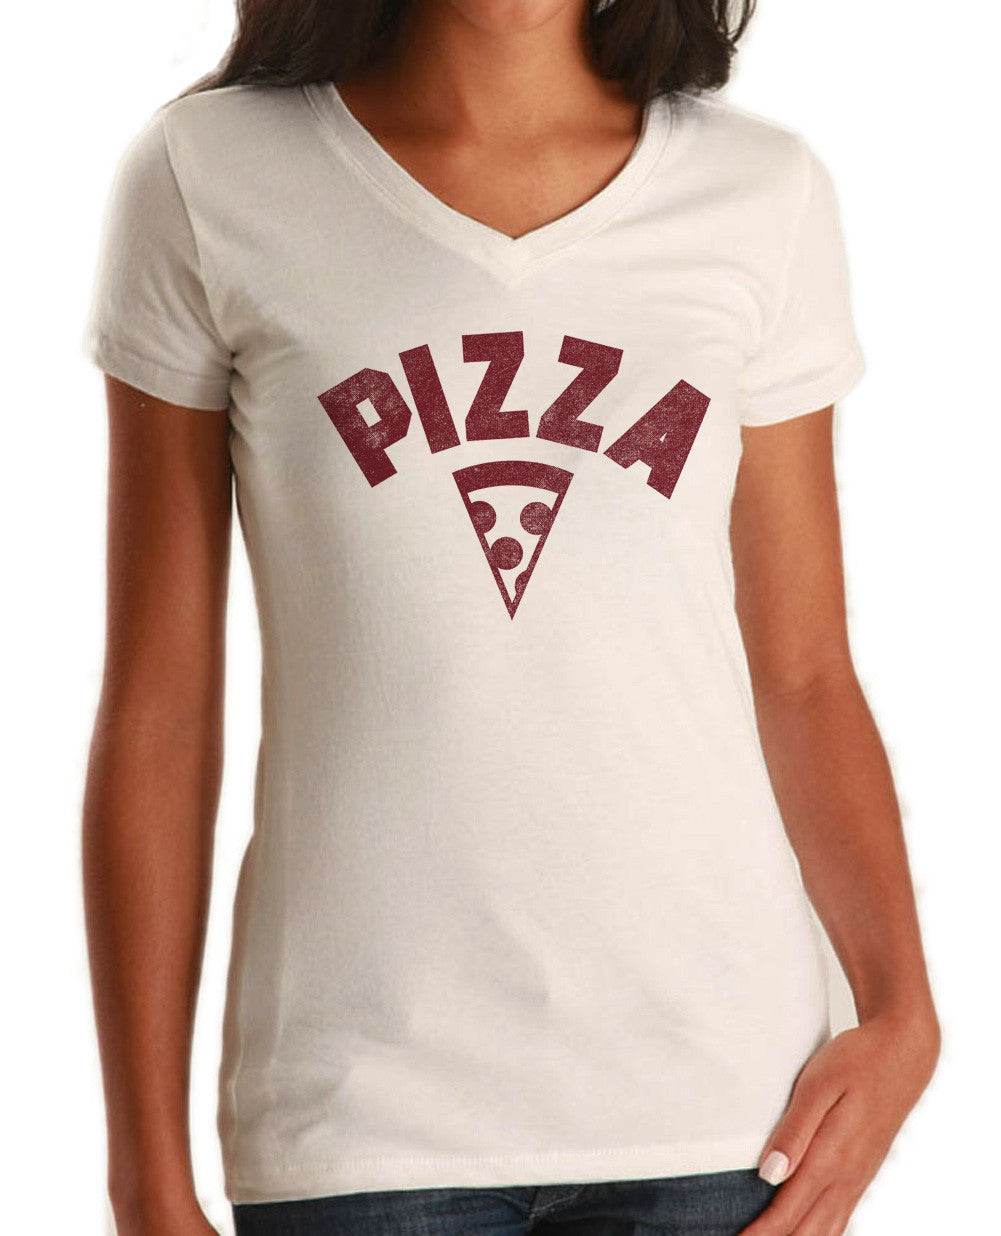 Women's Team Pizza Vneck T-Shirt Vintage Retro Athletic Logo Inspired